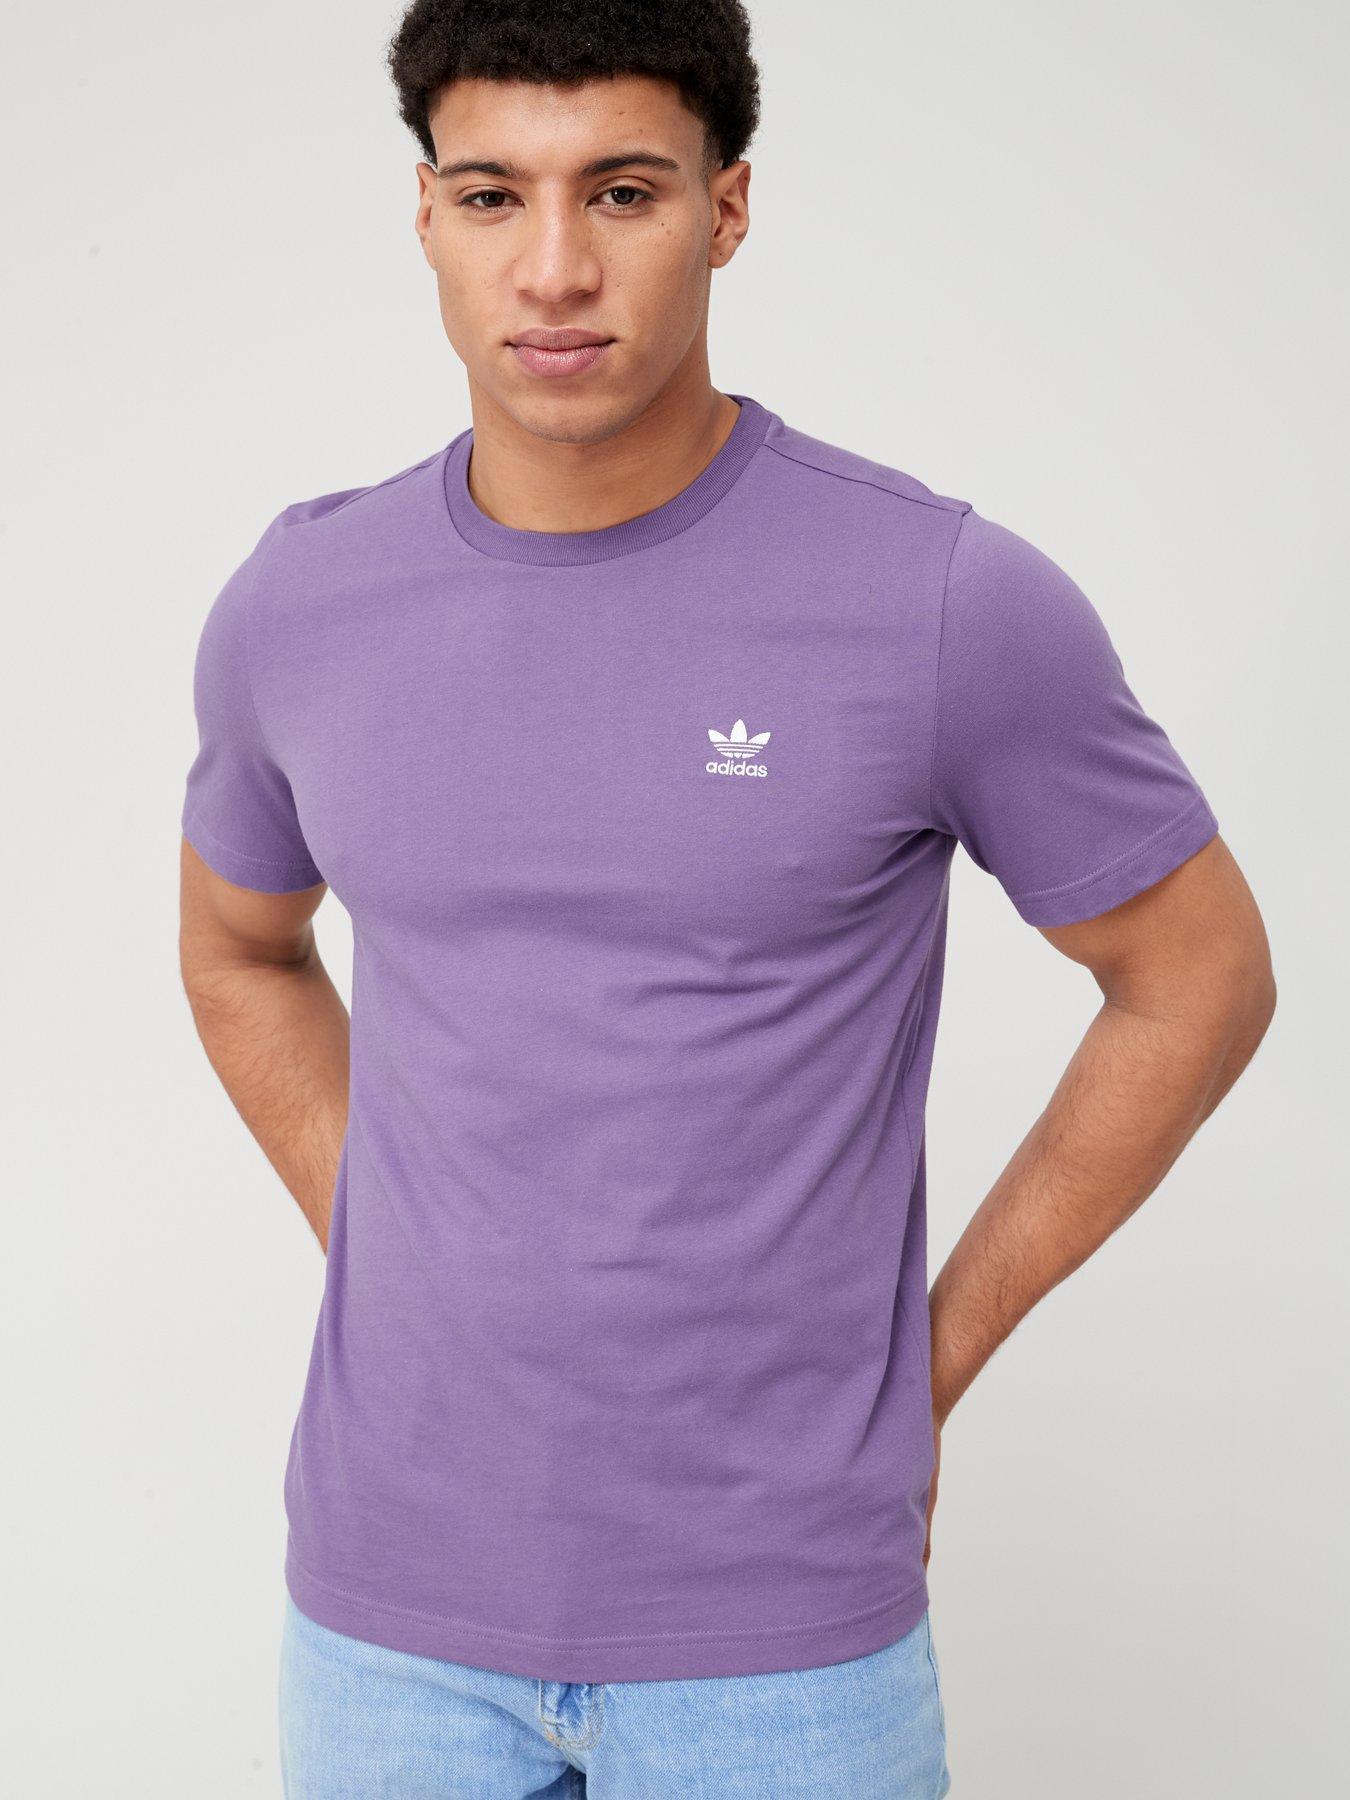 adidas Originals Trefoil Essentials T-Shirt - Purple